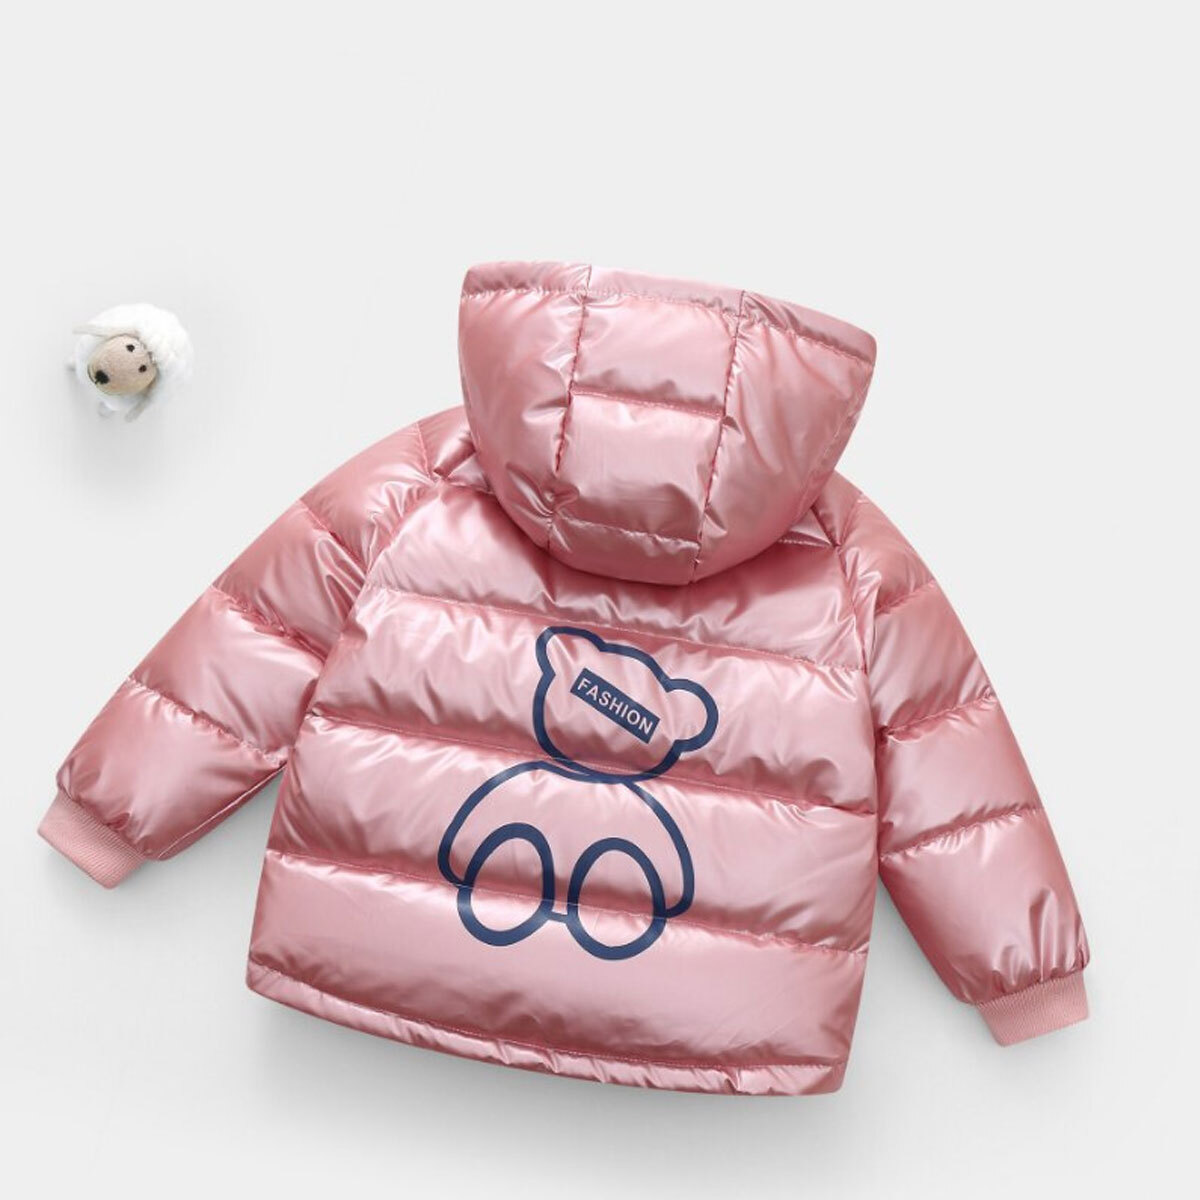 9 10 Best Kids Winter Jackets To Keep Them Warm In 2022